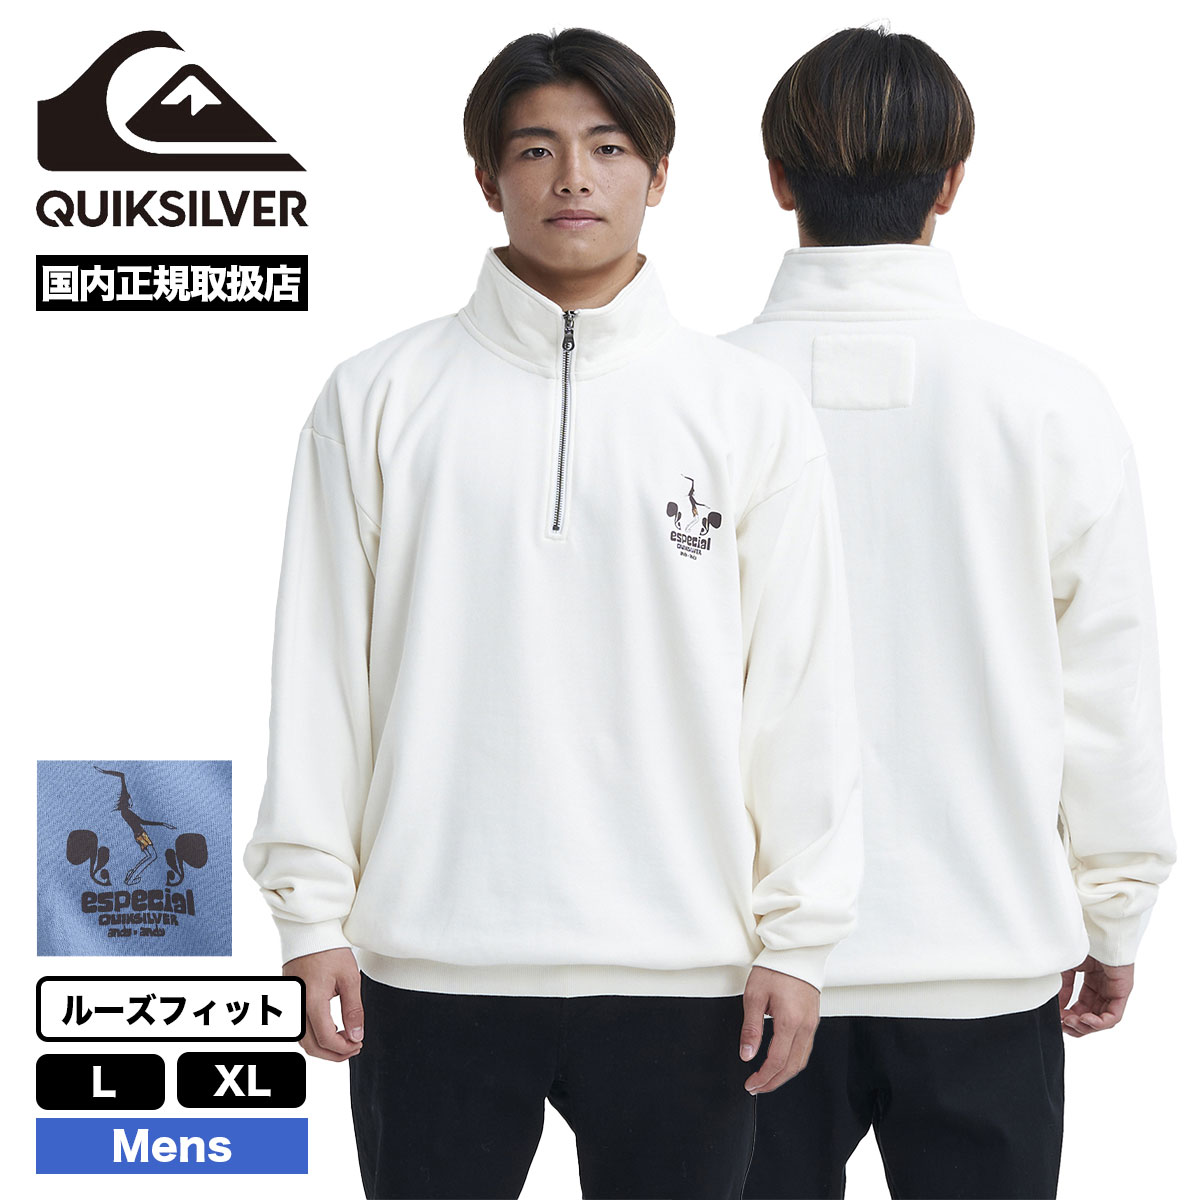 Quicksilver正規品販売店、ジャックオーシャンスポーツ